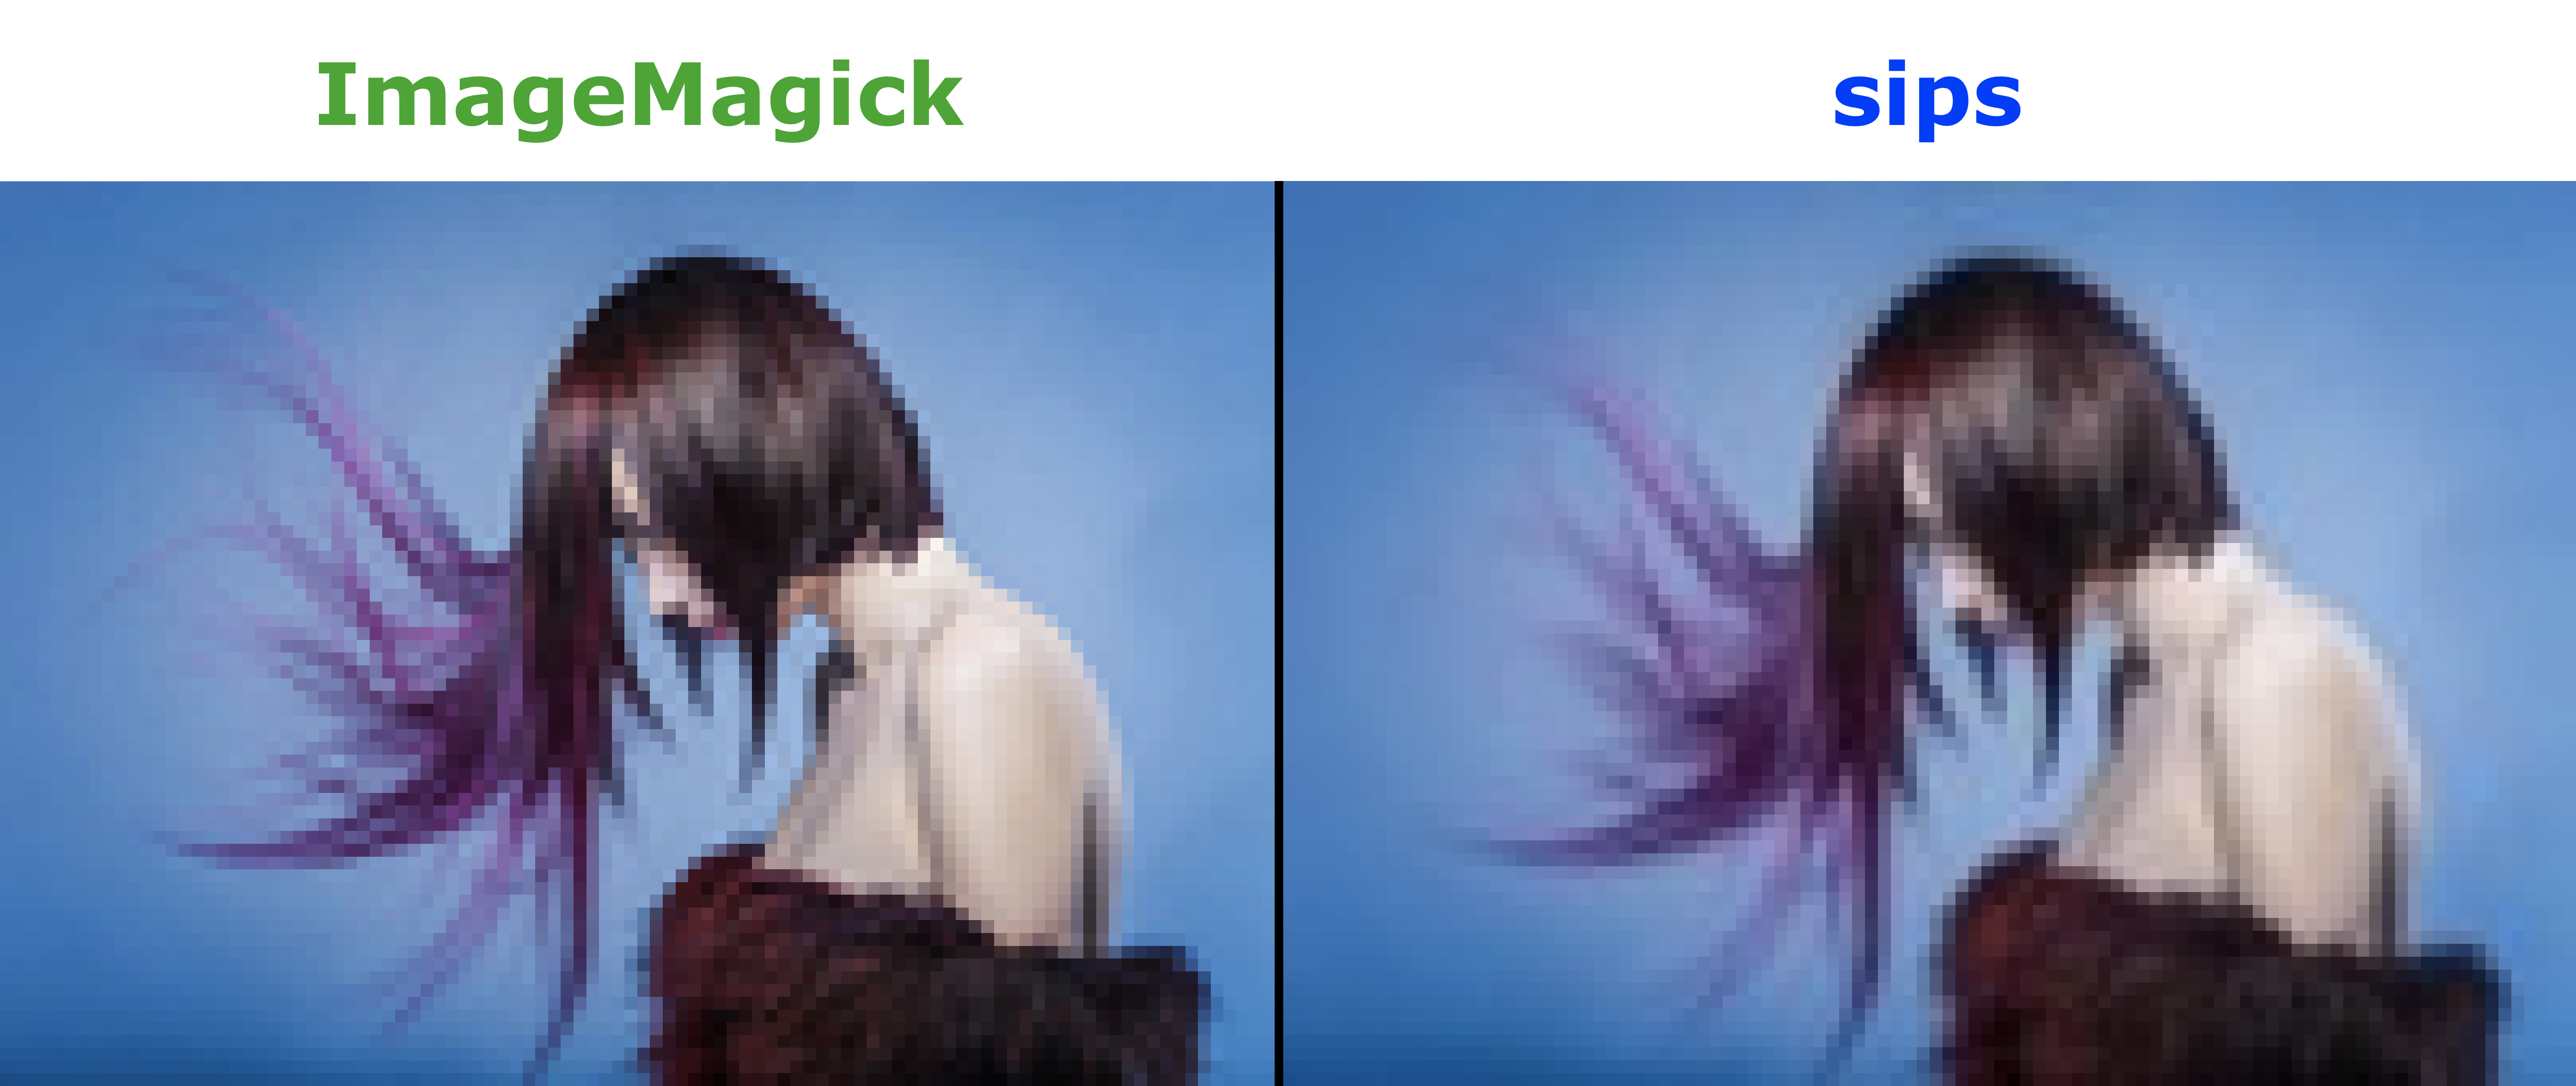 ImageMagick vs sips